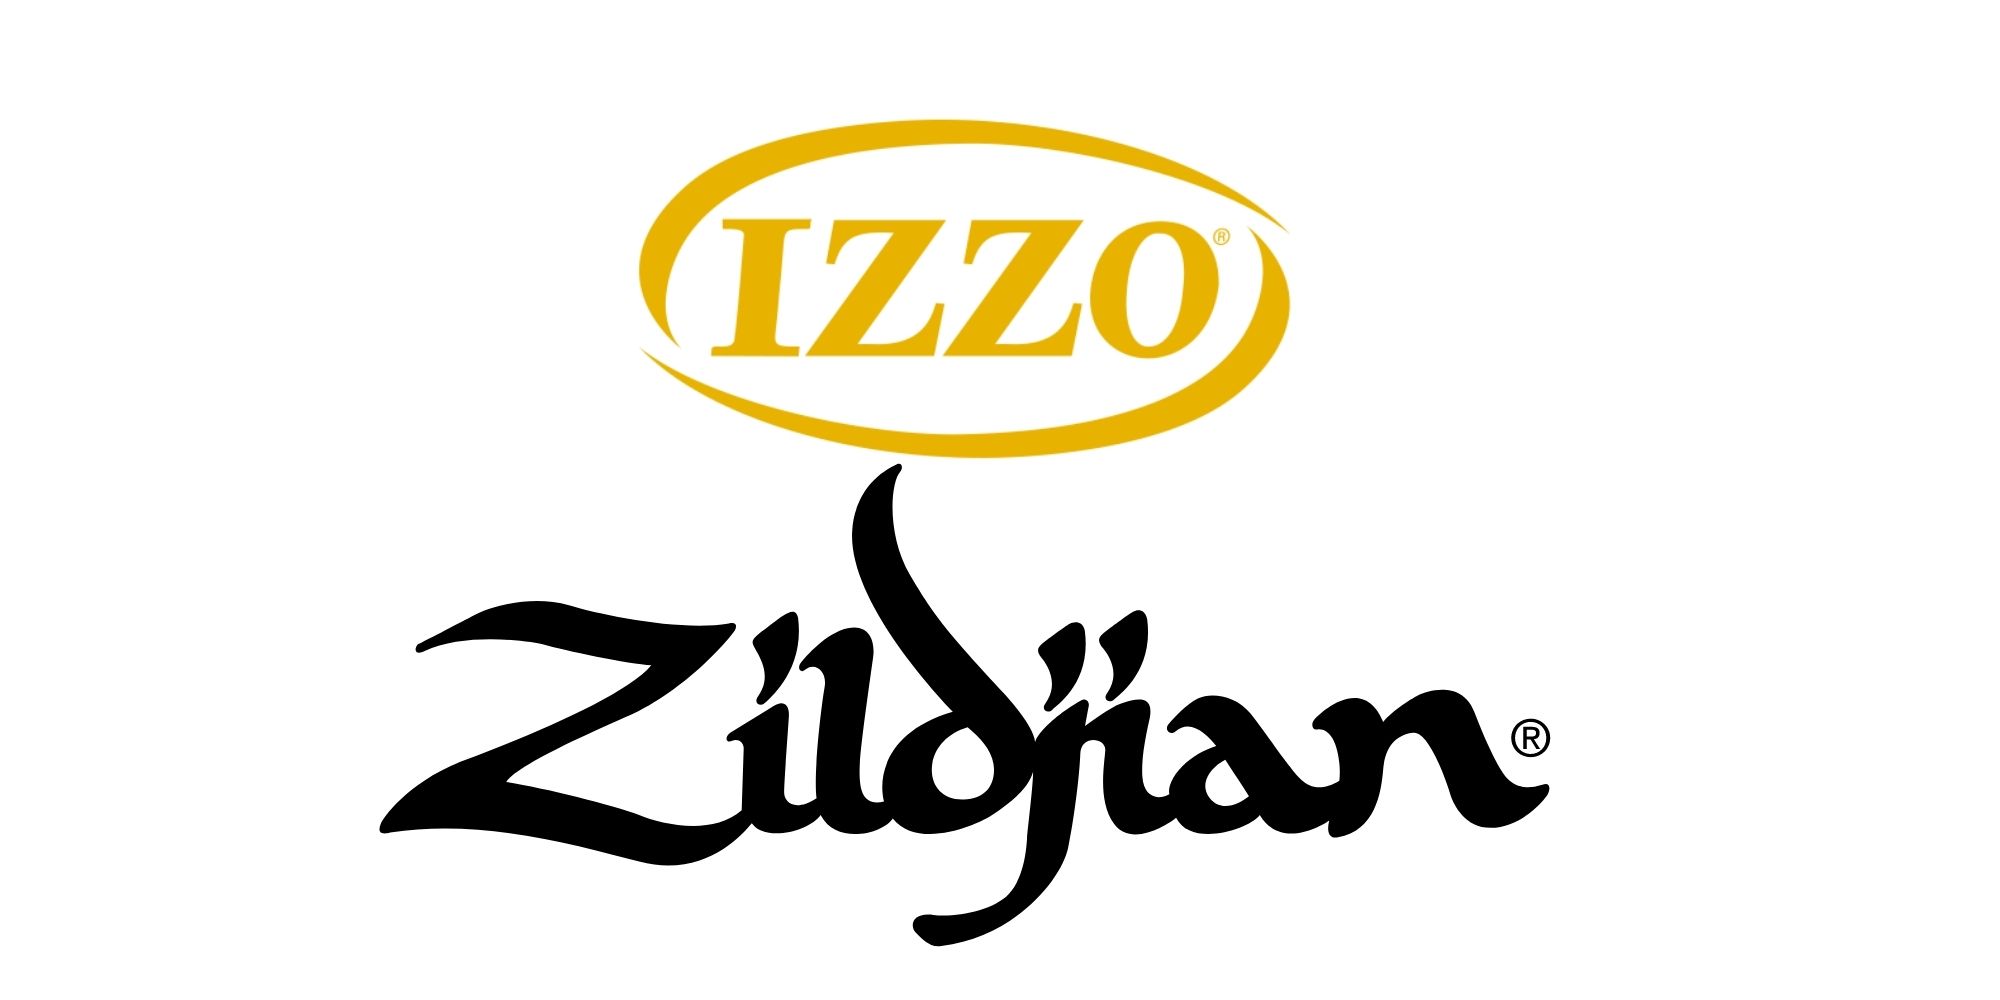 Distribuidora Zildjian